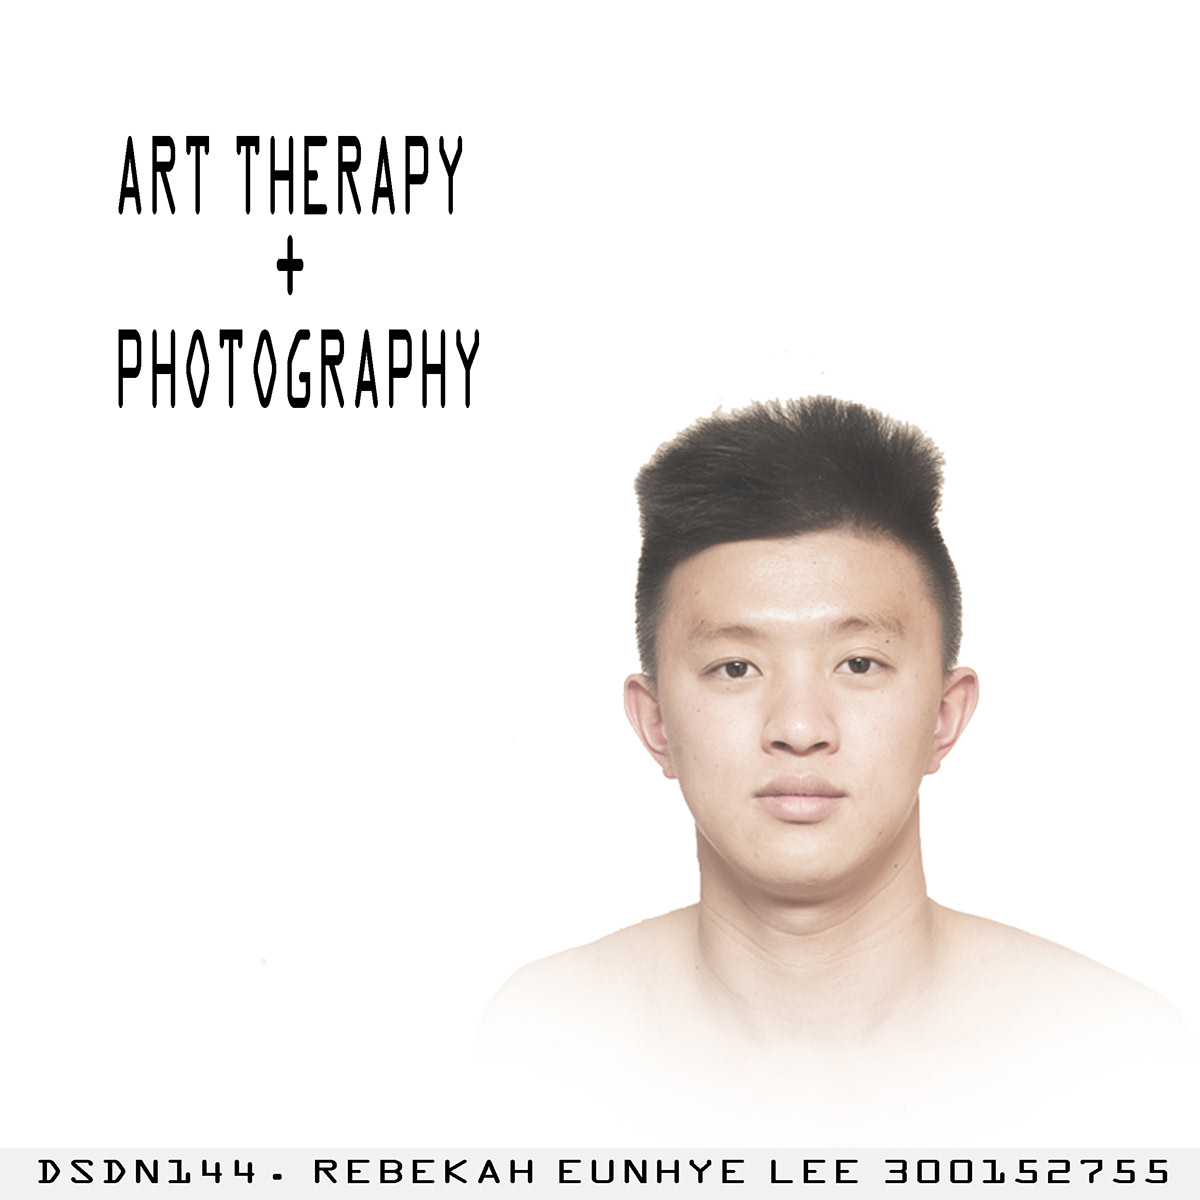 Photo Essay art therapy